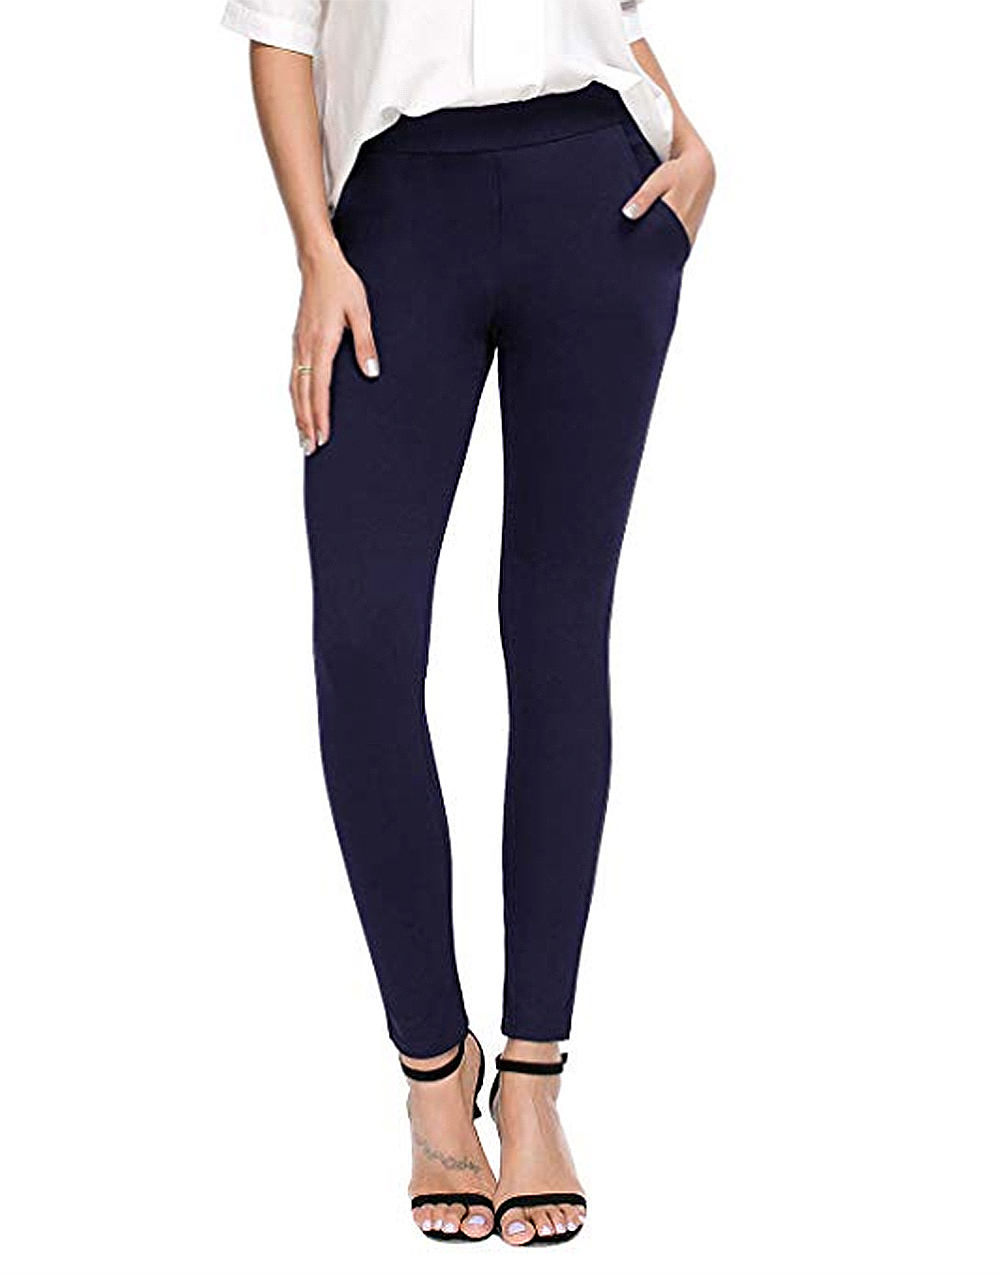 Bamans Women's Skinny Slim Stretch Yoga Dress Pants (Blue)